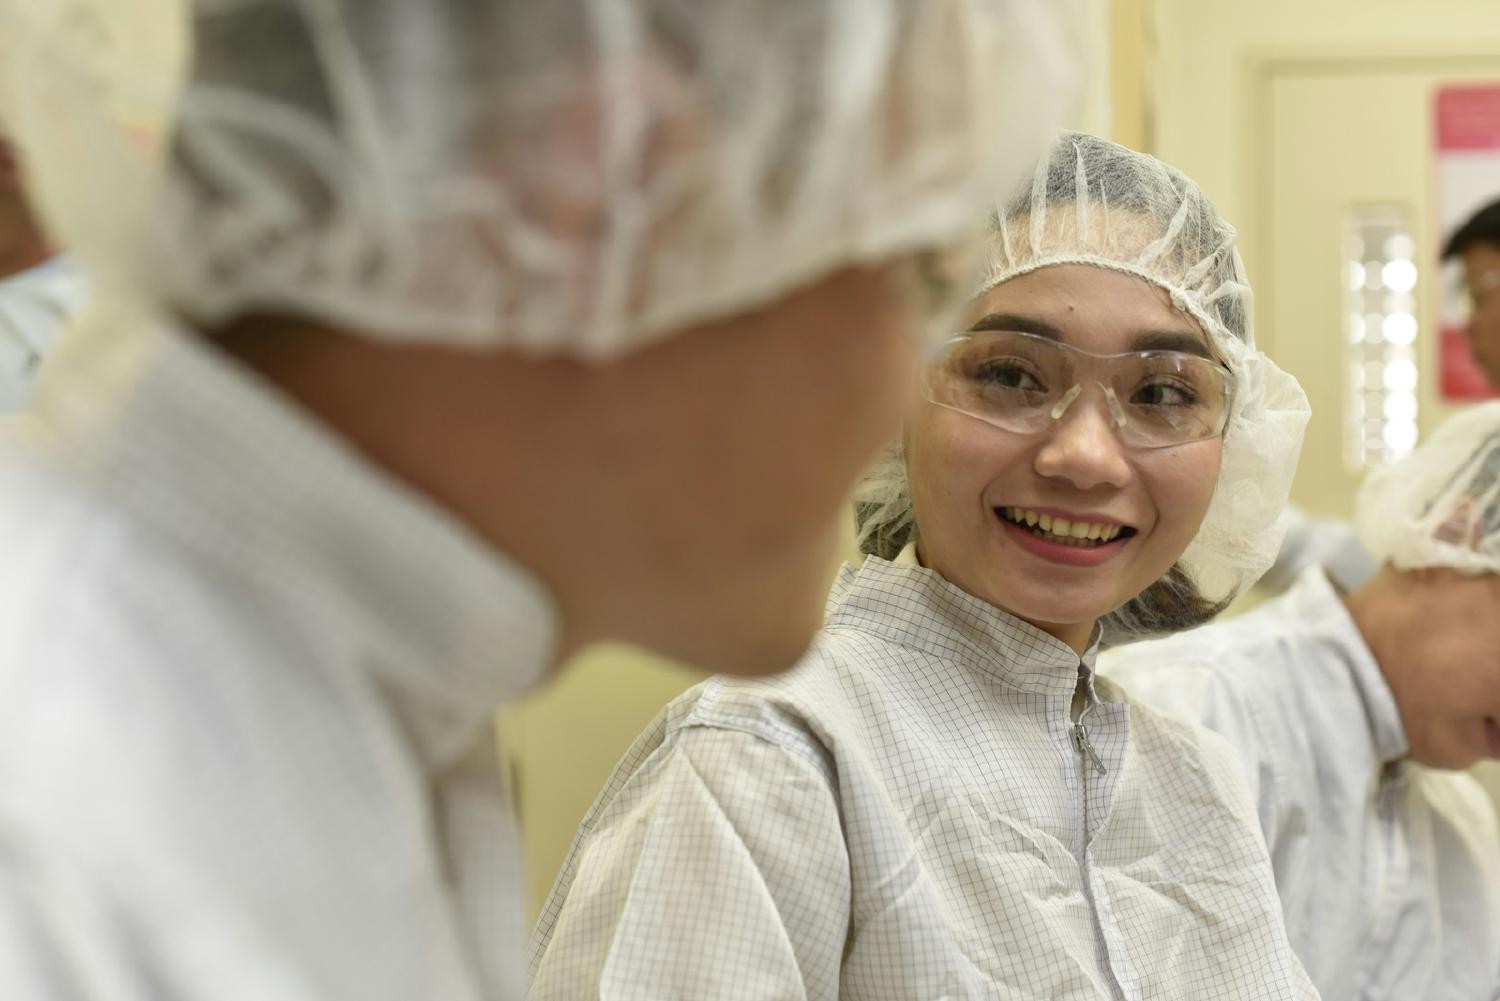 Intel employees preparing to enter an Intel fabrication plant.